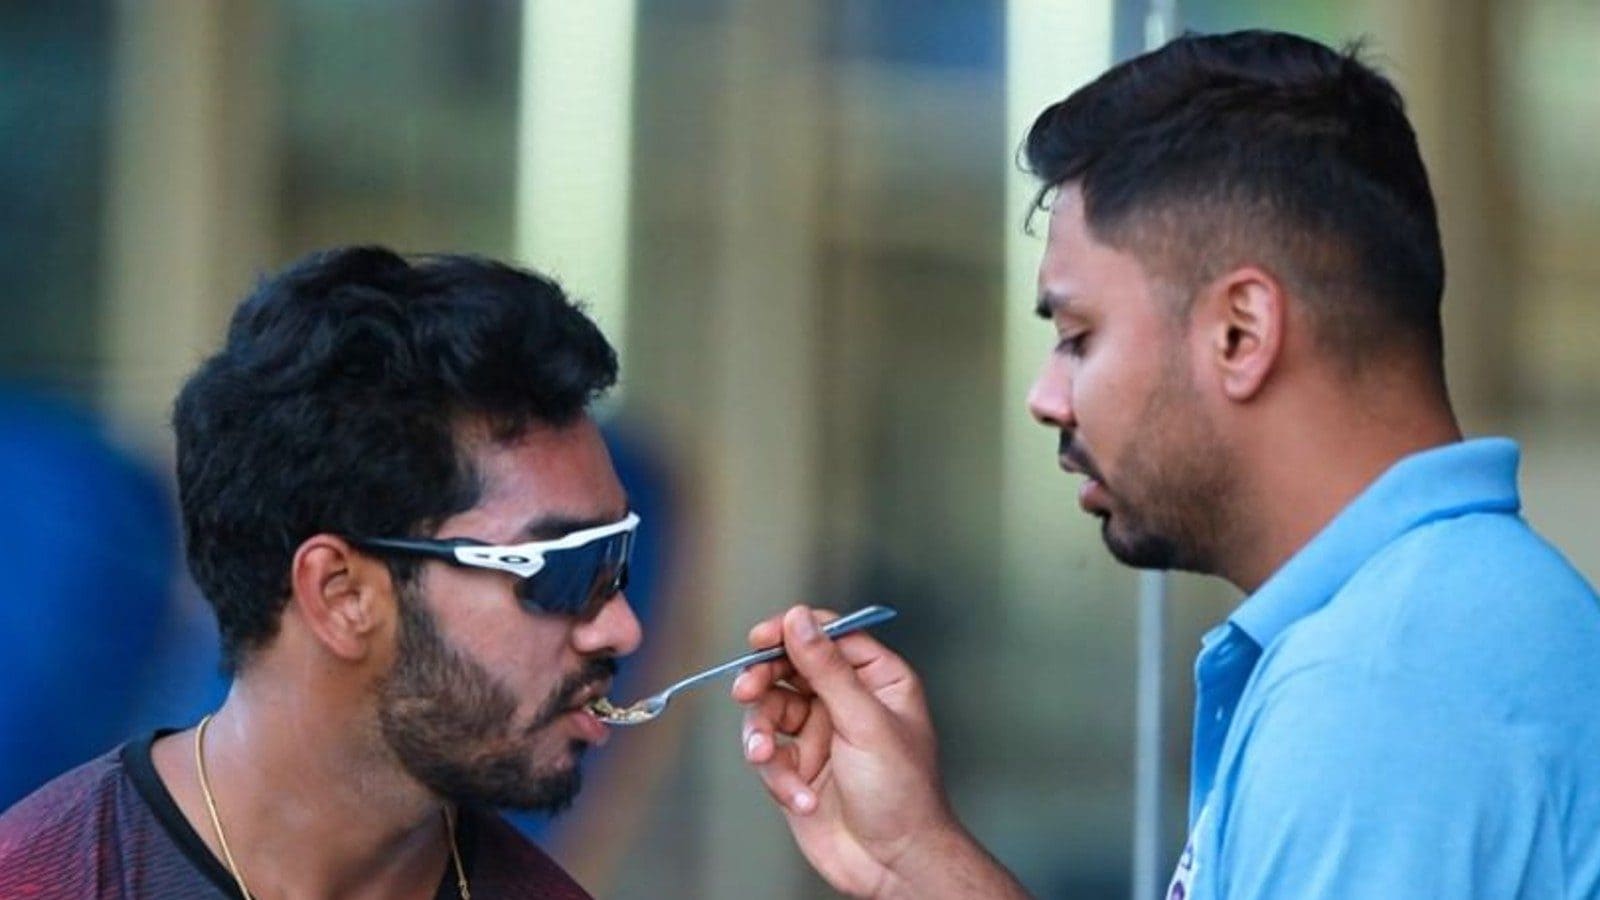 IPL 2021: Bromance Alert! Pic of Avesh Khan Feeding Venkatesh Iyer Goes Viral